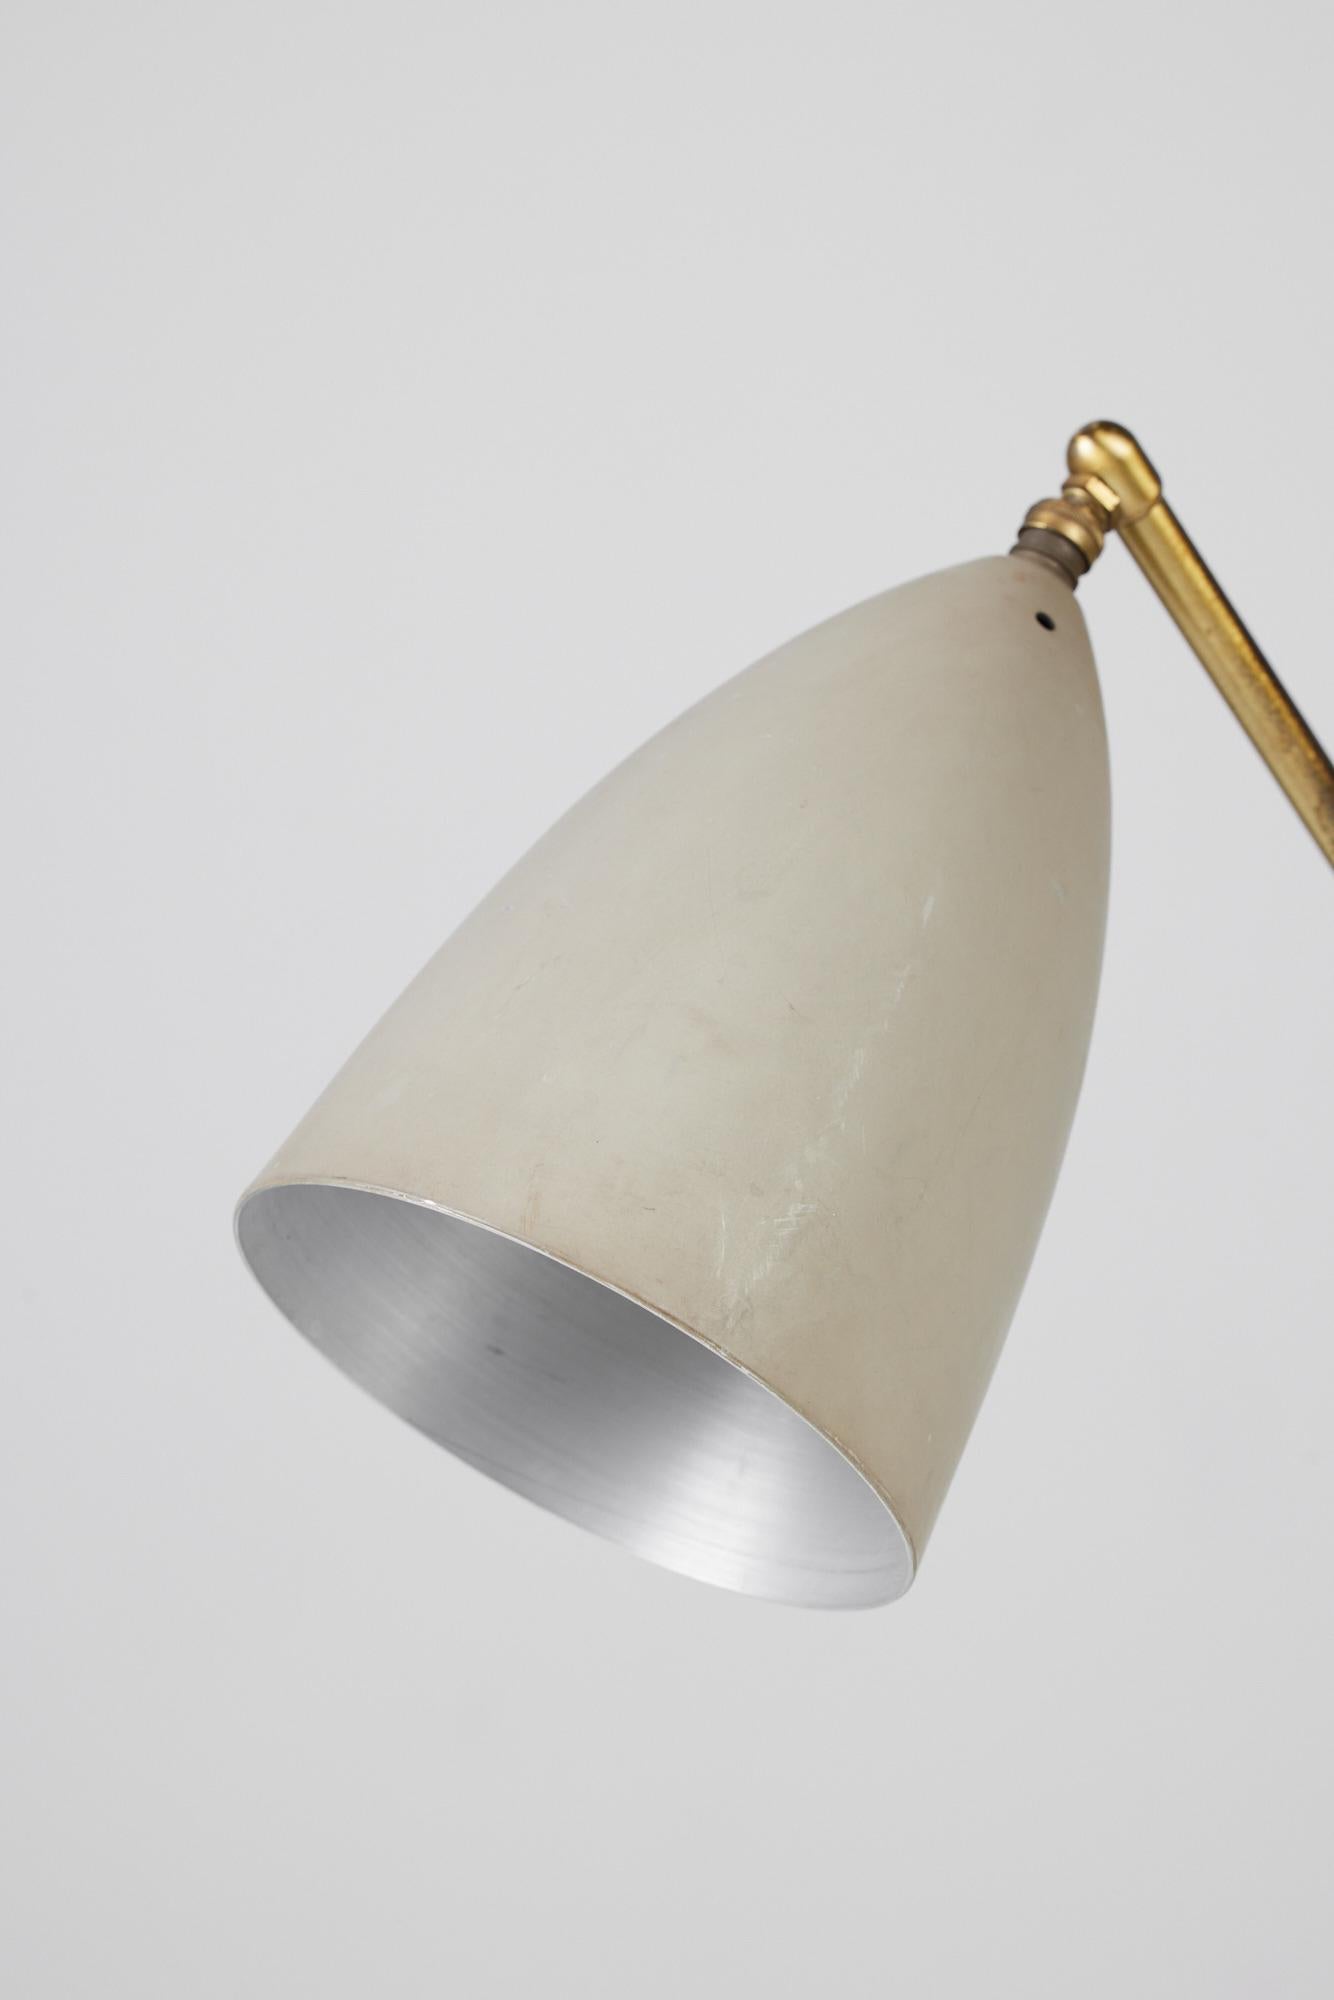 Greta Grossman 'Model 732' Table Lamp Produced by Ralph O. Smith 4